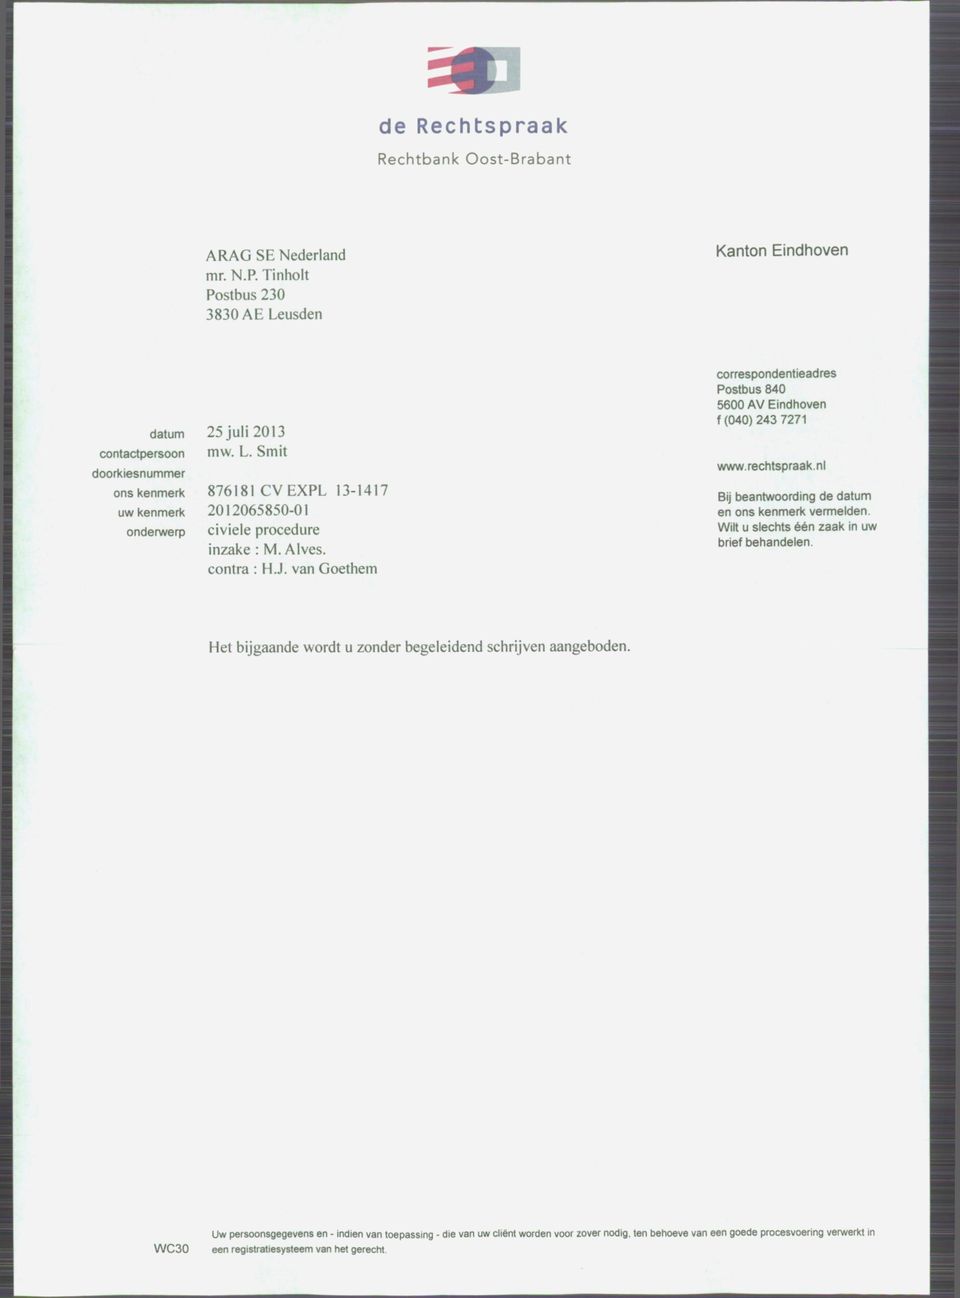 Alves. contra : H.J. van Goethem correspondentieadres Postbus 840 5600 AV Eindhoven f (040) 243 7271 vww.rectitspraak.